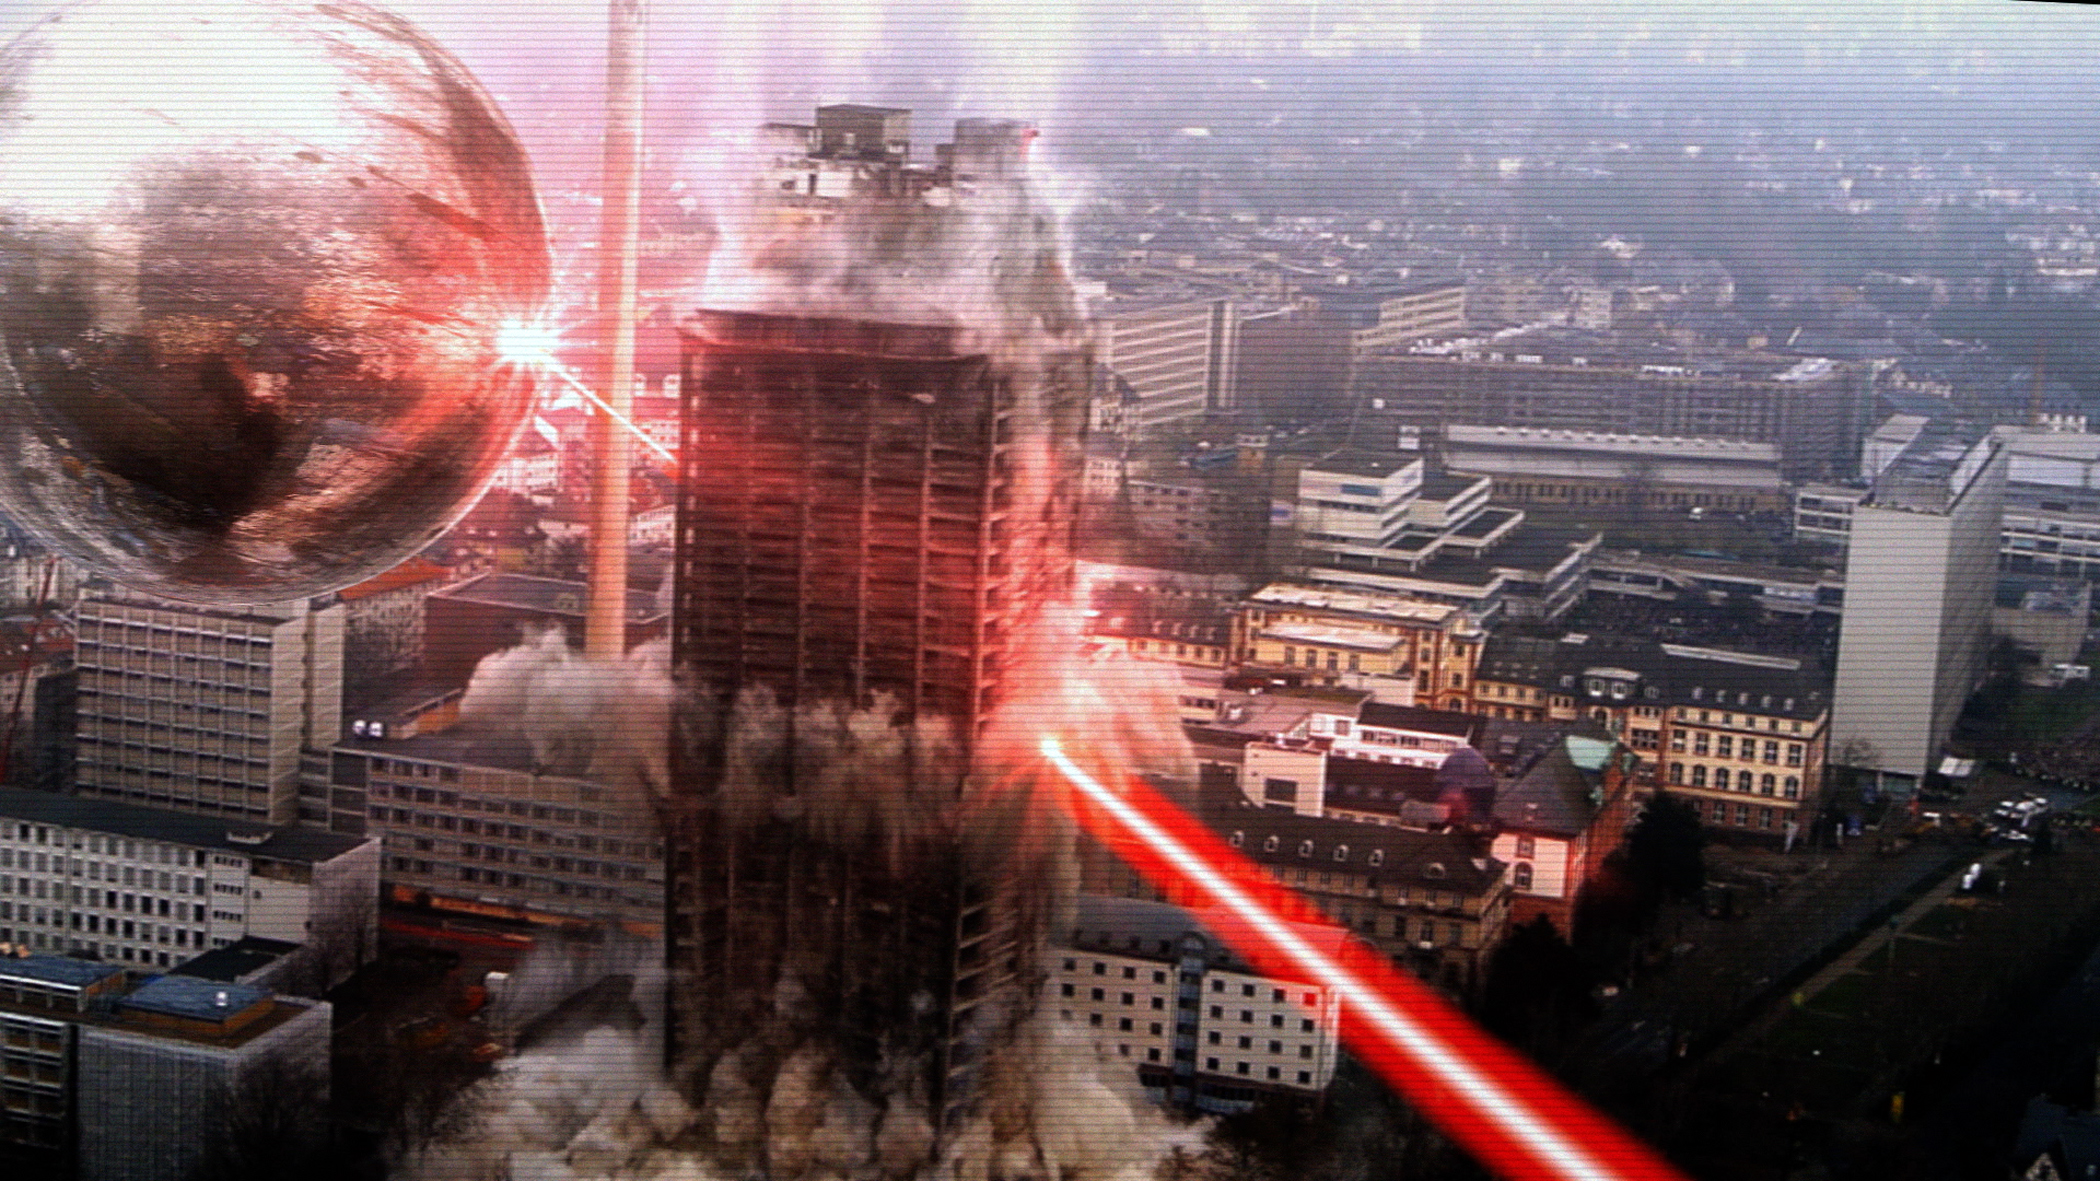 A giant sphere wreaks havoc on a city in Phantasm Ravager.